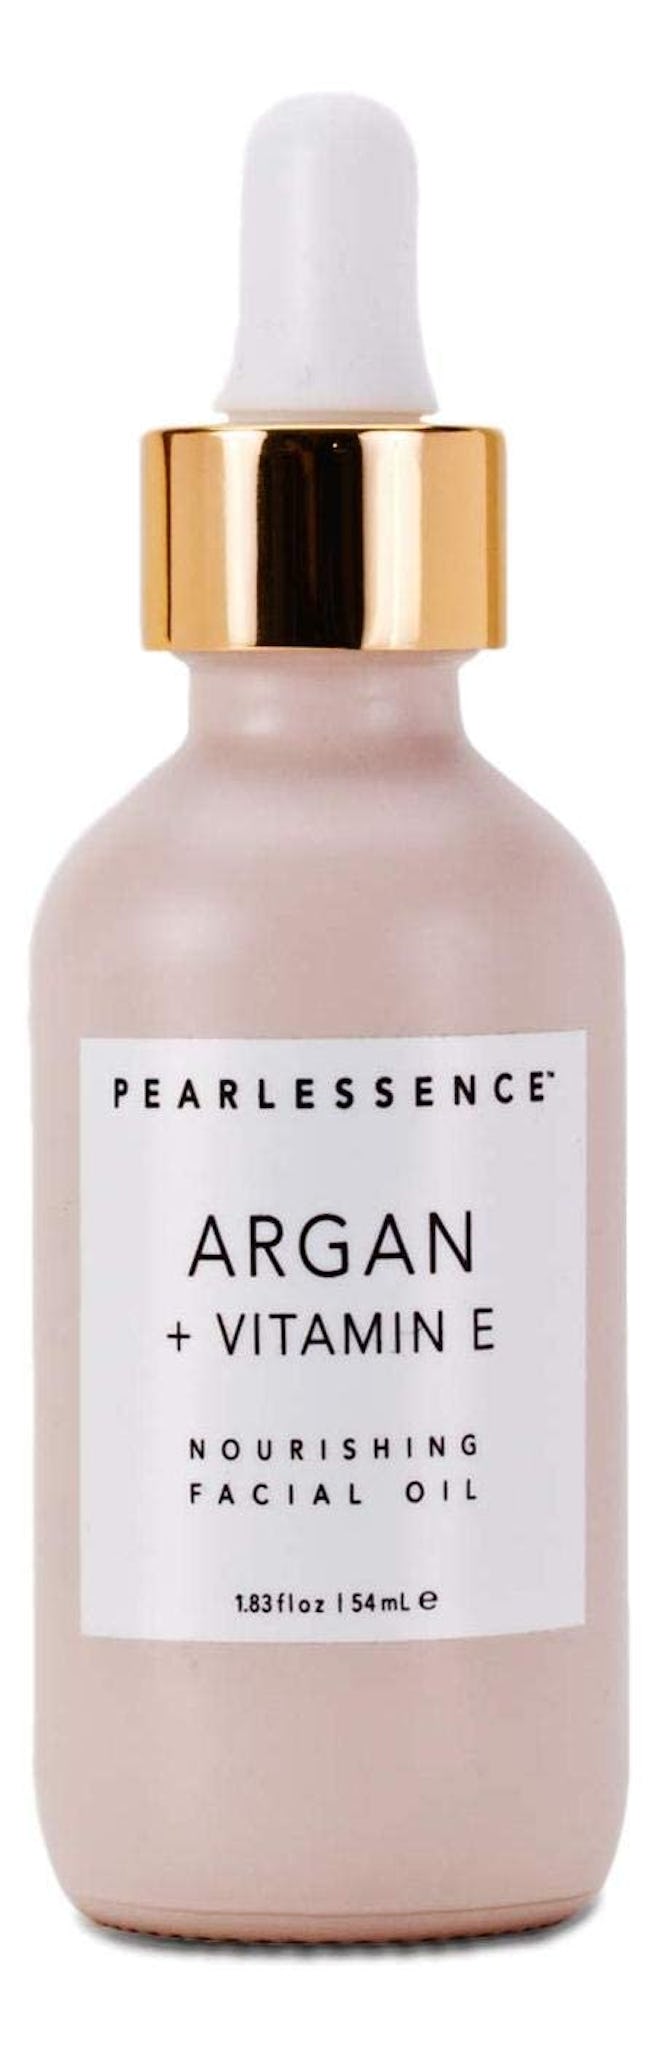 Pearlessence Argan & Vitamin E Facial Oil